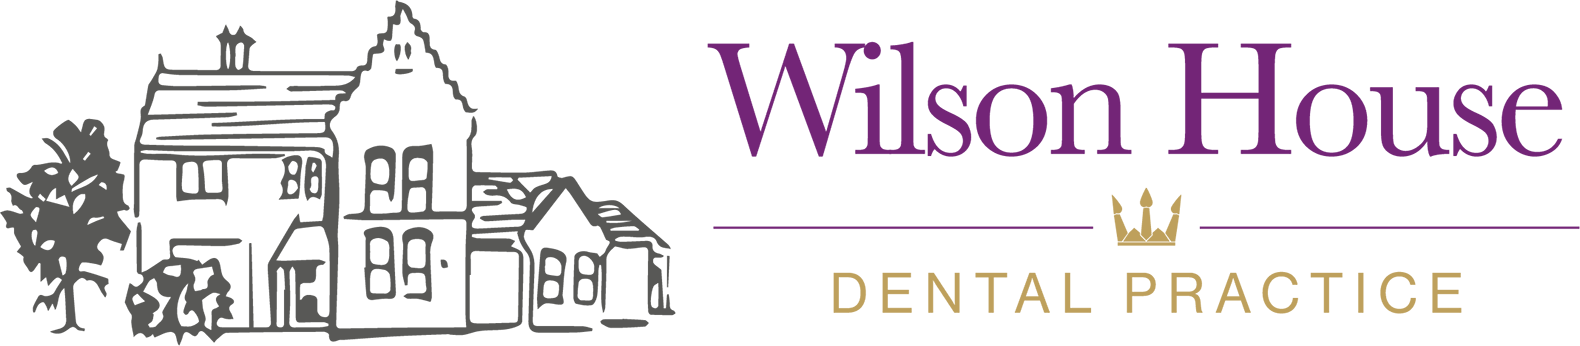 wilson house dental practice logo